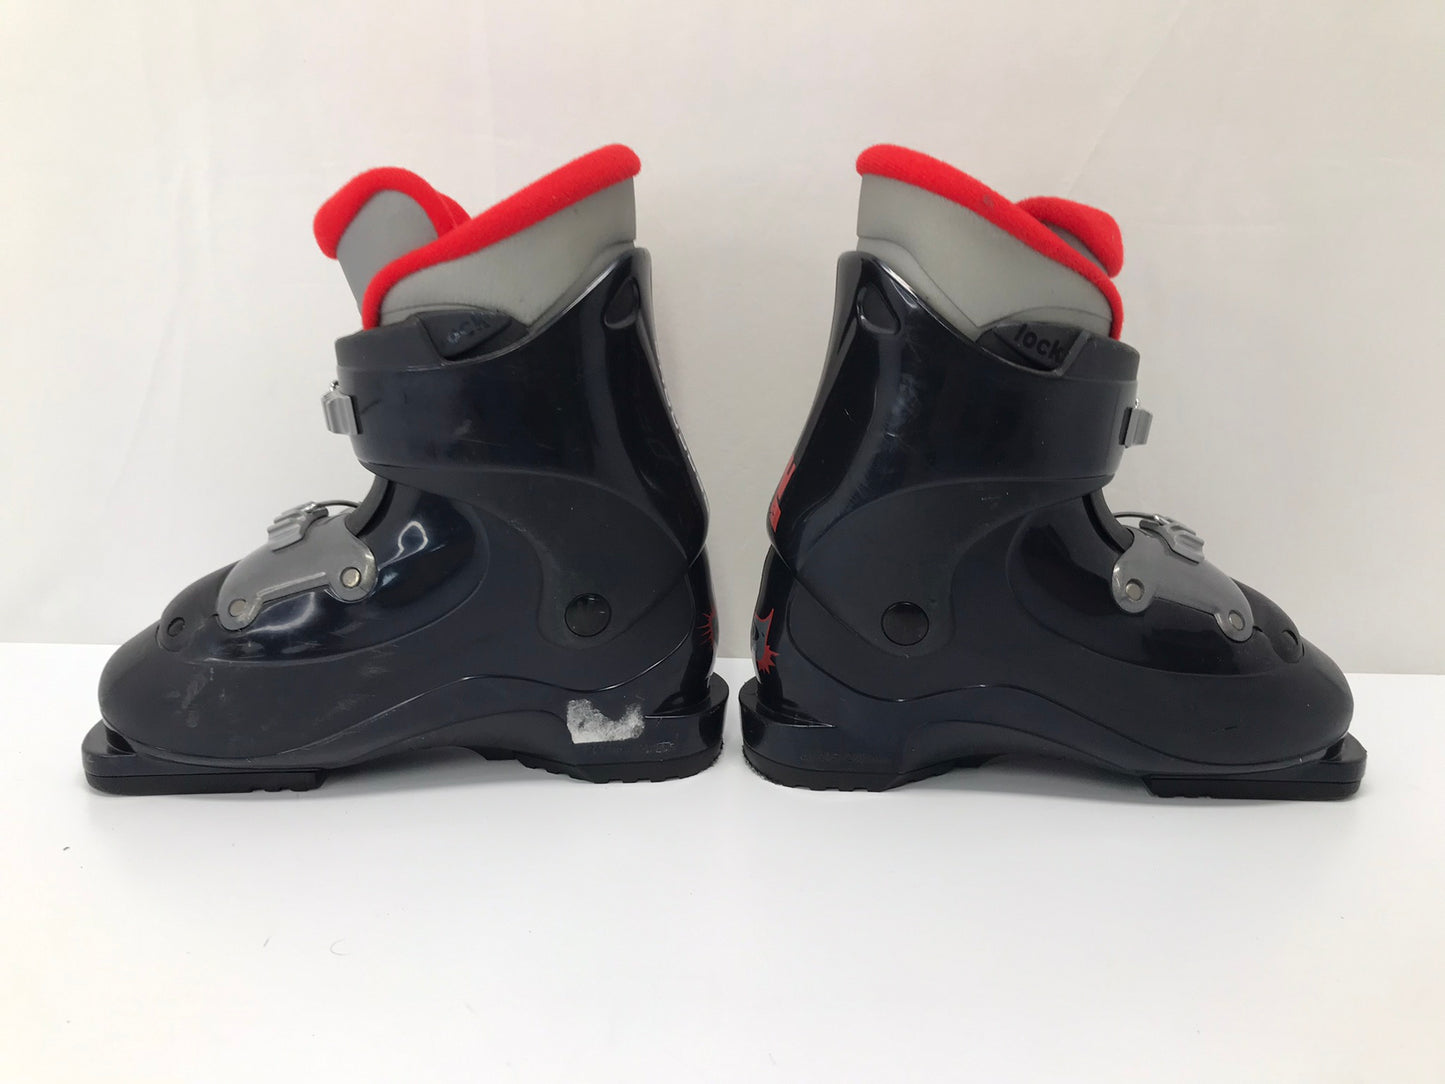 Ski Boots Mondo Size 20.0 Child Size 13.5-2 247 mm Salomon Black Red Excellent